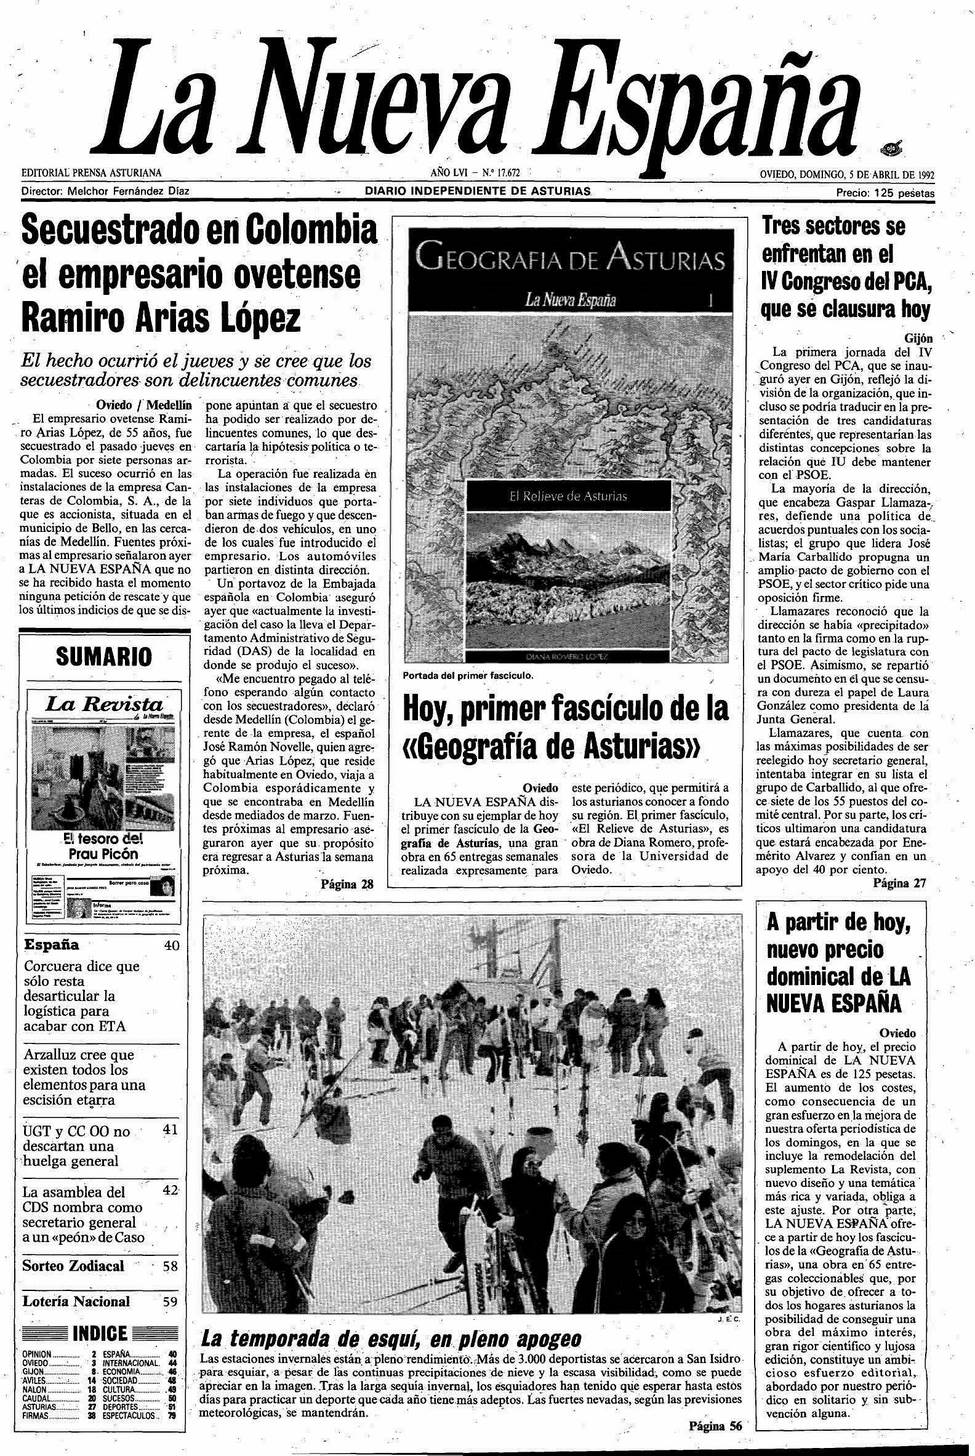 Portada del Domingo, 5 de Abril de 1992